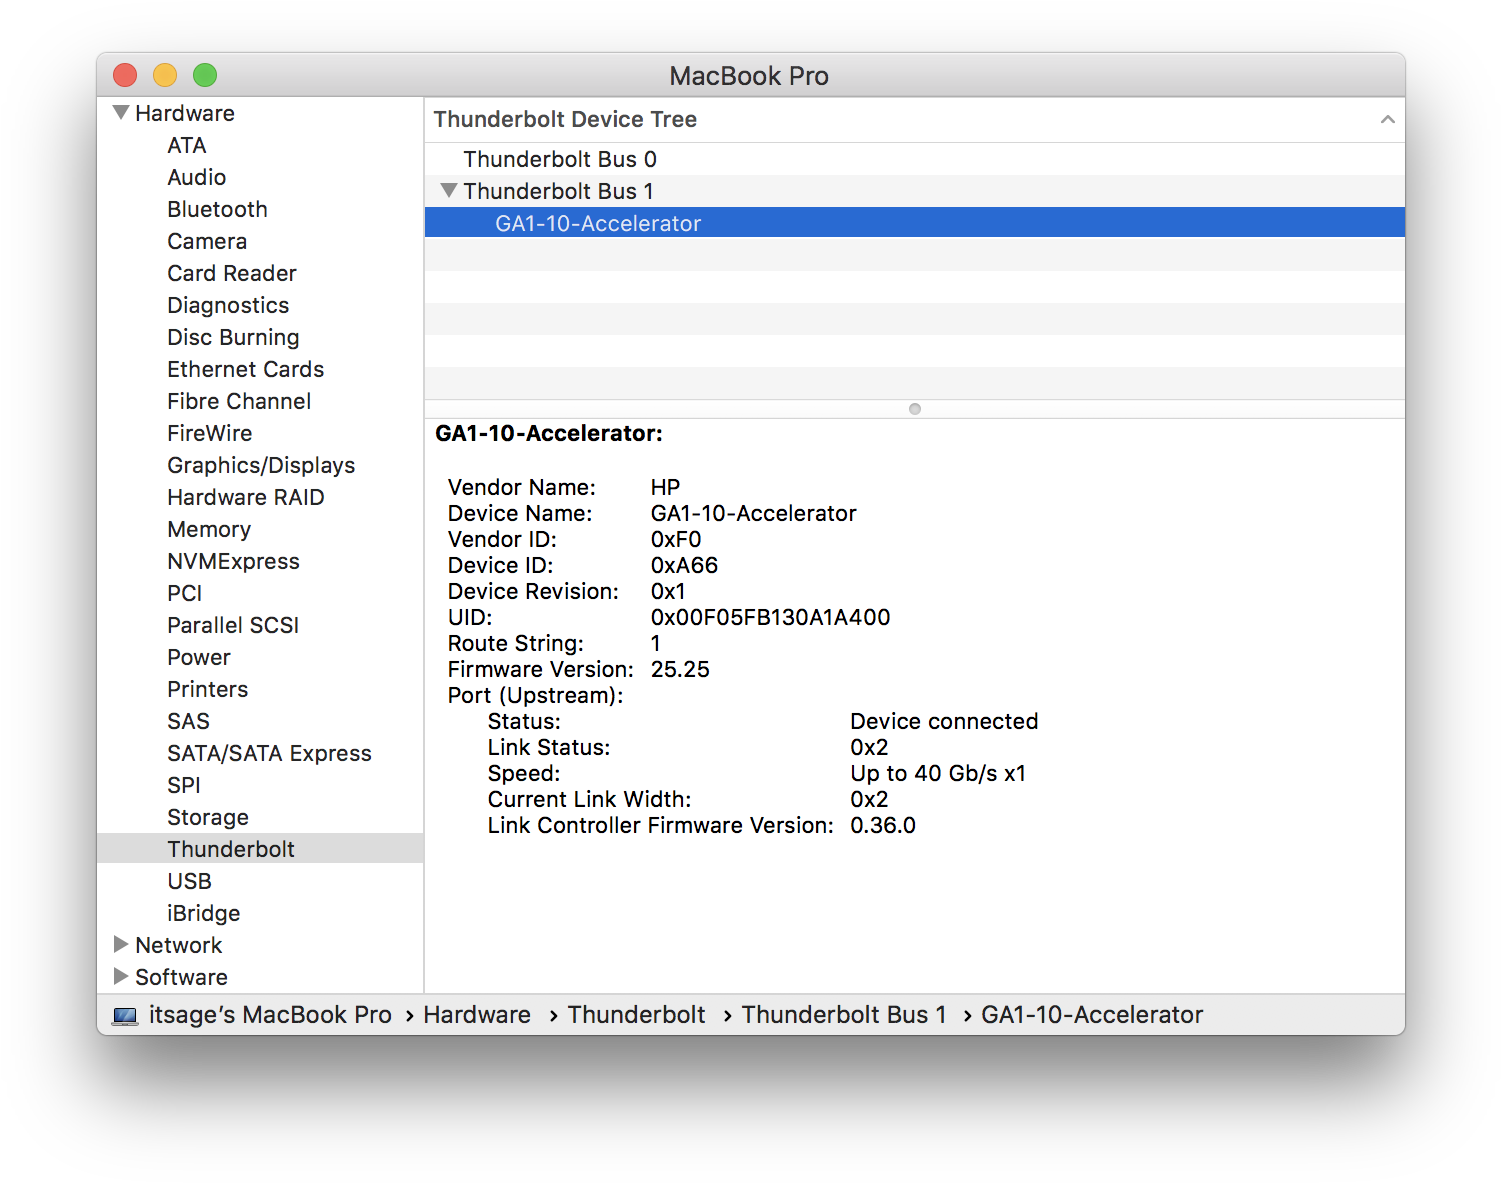 Mac Book Pro Thunderbolt Device Details